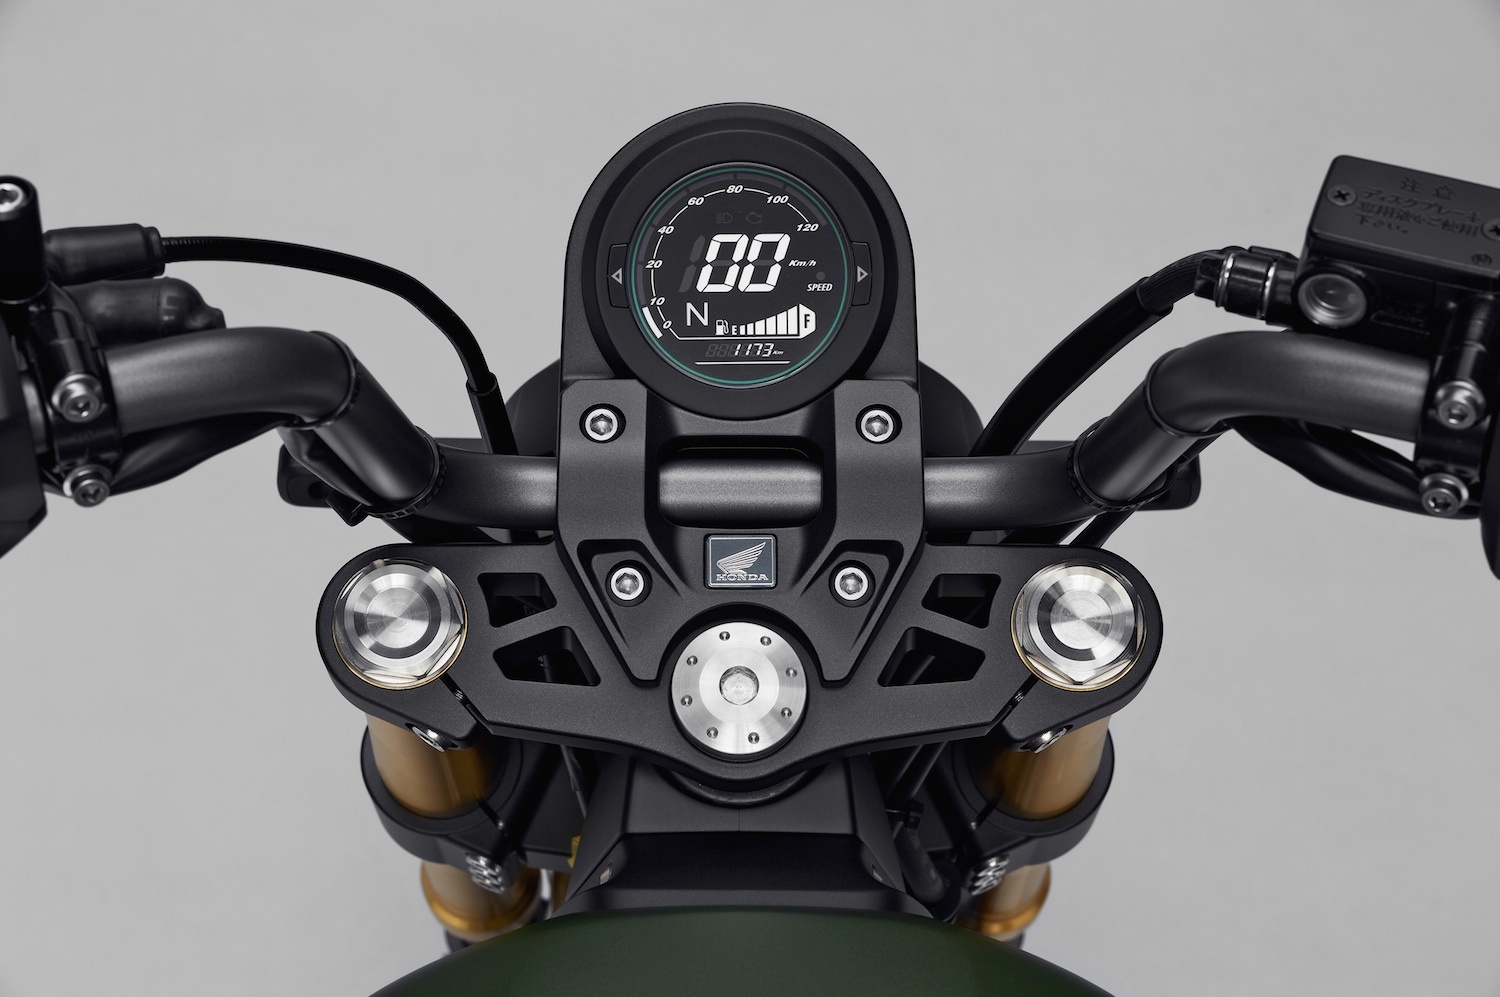 2016 Honda Grom Scrambler Concept Motorcycle